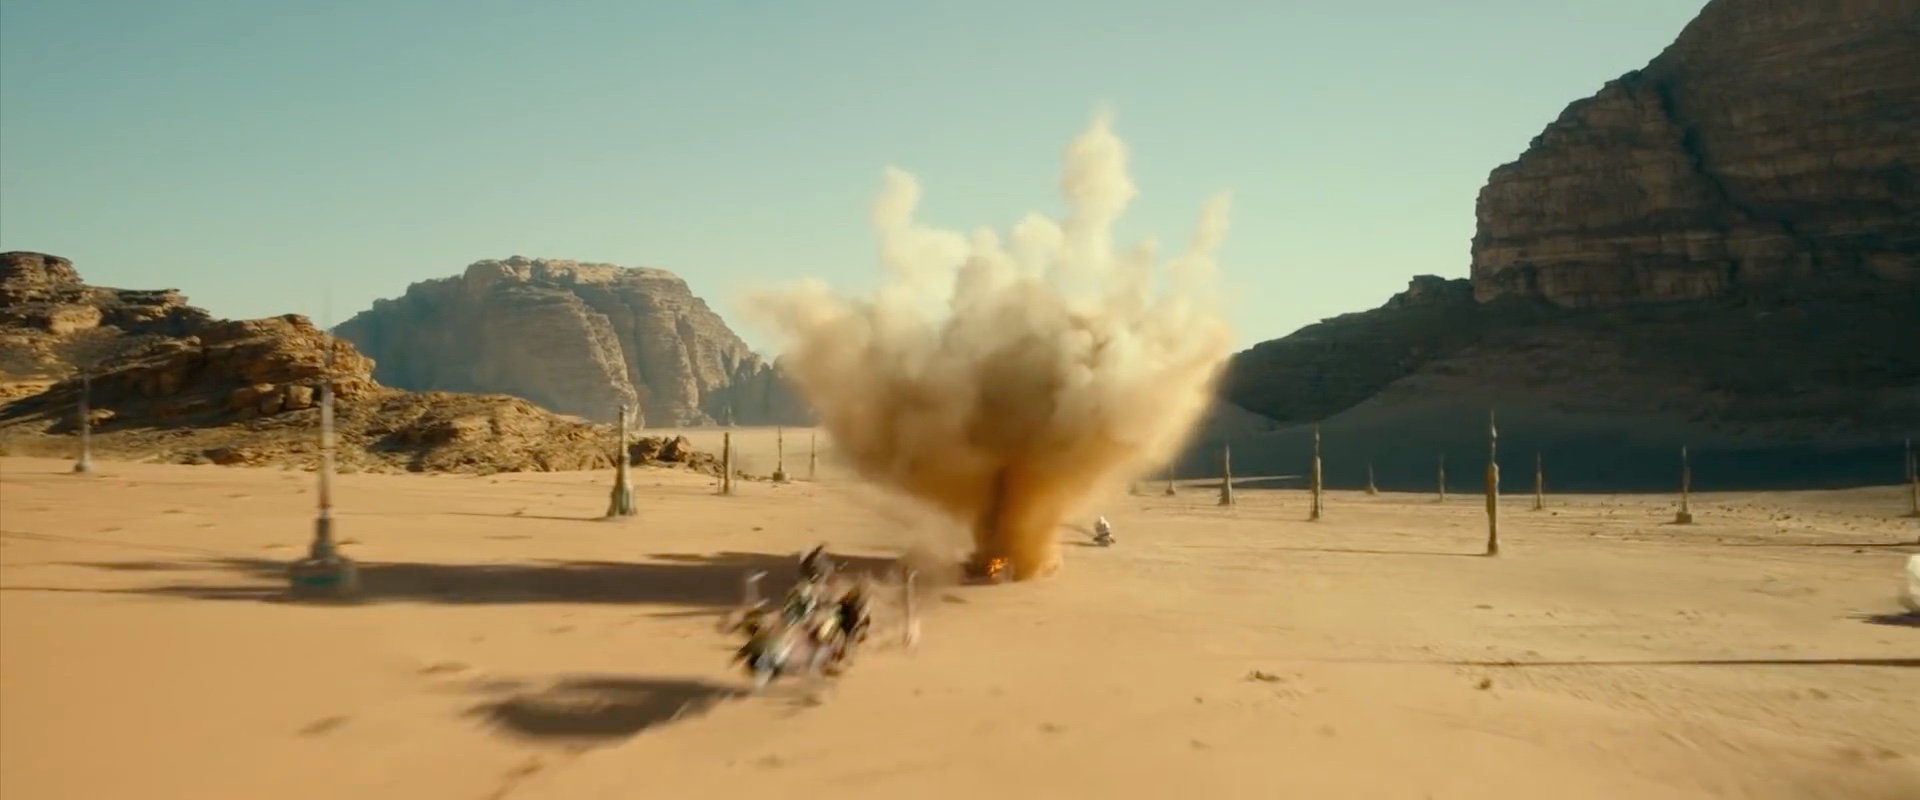 Jetpack-wearing stormtroopers chasing a speeder across a desert landscape